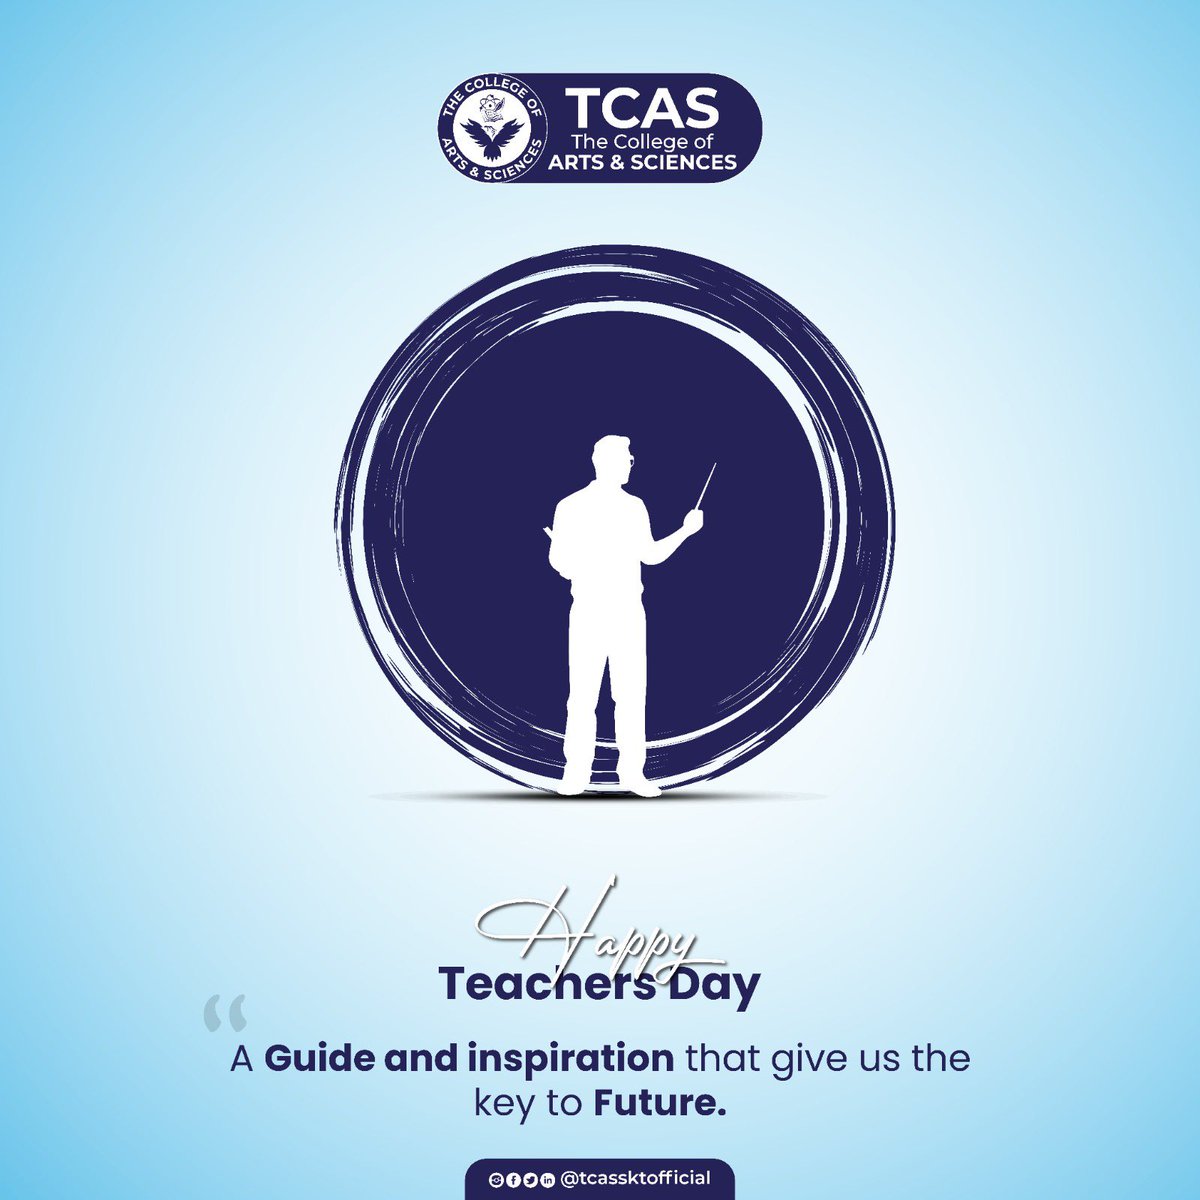 𝗛𝗔𝗣𝗣𝗬 𝗧𝗘𝗔𝗖𝗛𝗘𝗥𝗦' 𝗗𝗔𝗬! 👩‍🏫👨‍🏫 

'𝒯𝑒𝒶𝒸𝒽𝑒𝓇𝓈 𝒸𝒽𝒶𝓃𝑔𝑒 𝓉𝒽𝑒 𝓌𝑜𝓇𝓁𝒹, 𝑜𝓃𝑒 𝒸𝒽𝒾𝓁𝒹 𝒶𝓉 𝒶 𝓉𝒾𝓂𝑒.'

#tcas #TCAS #thecollegeofartsandscineces #sialkot #HappyTeachersDay #HappyTeachersDay2023